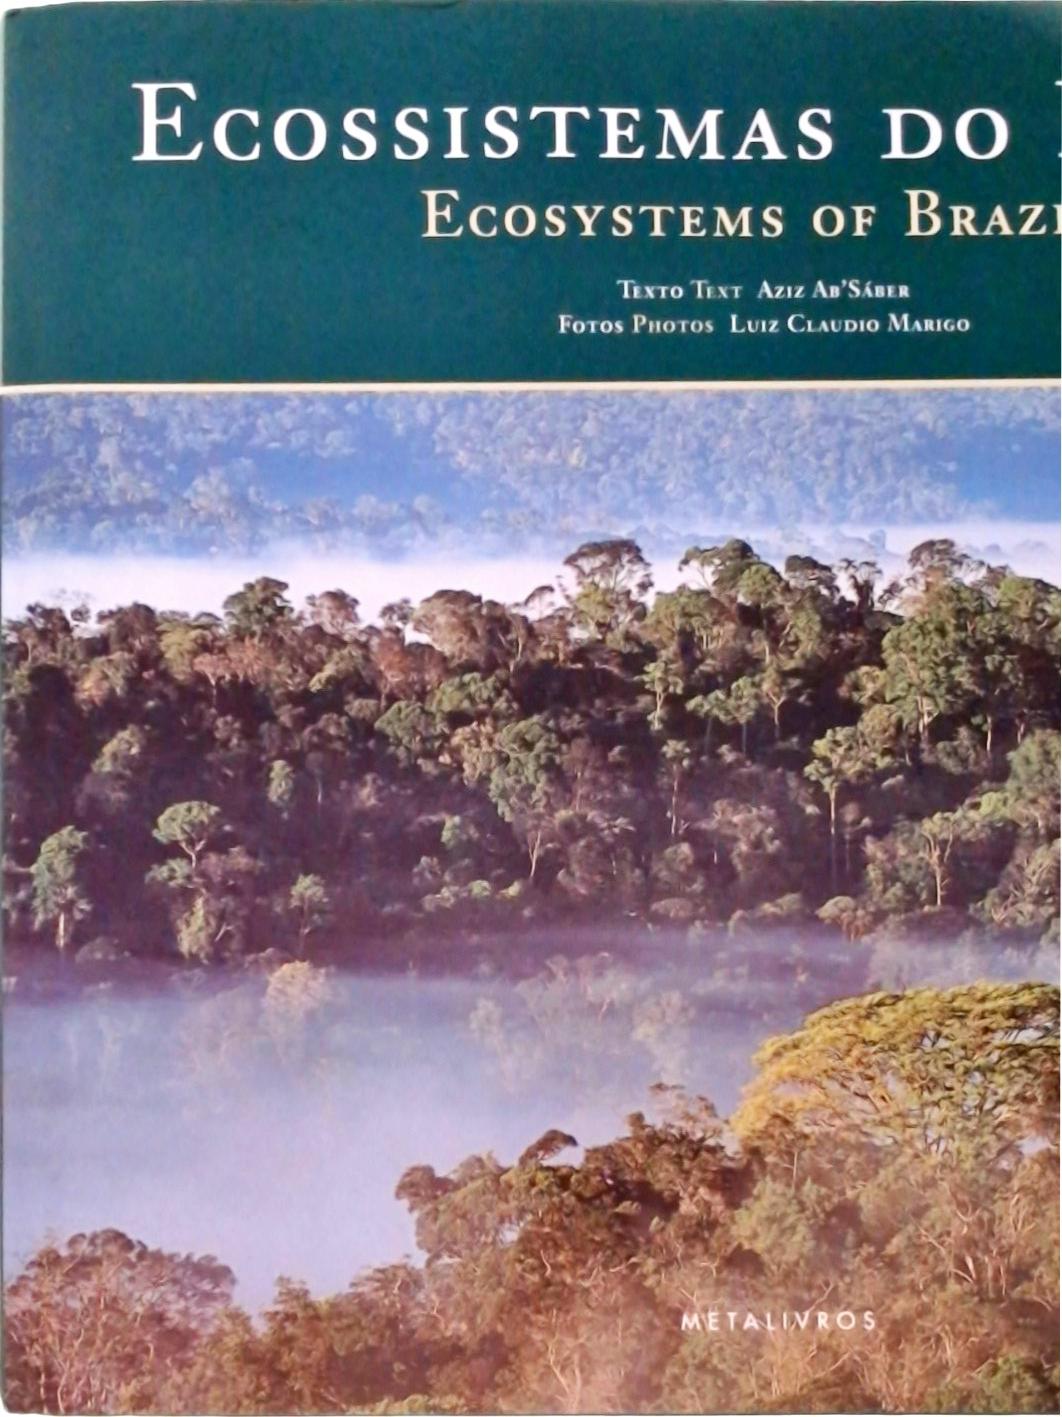 Ecossistemas Do Brazil - Ecosystems Of Brazil